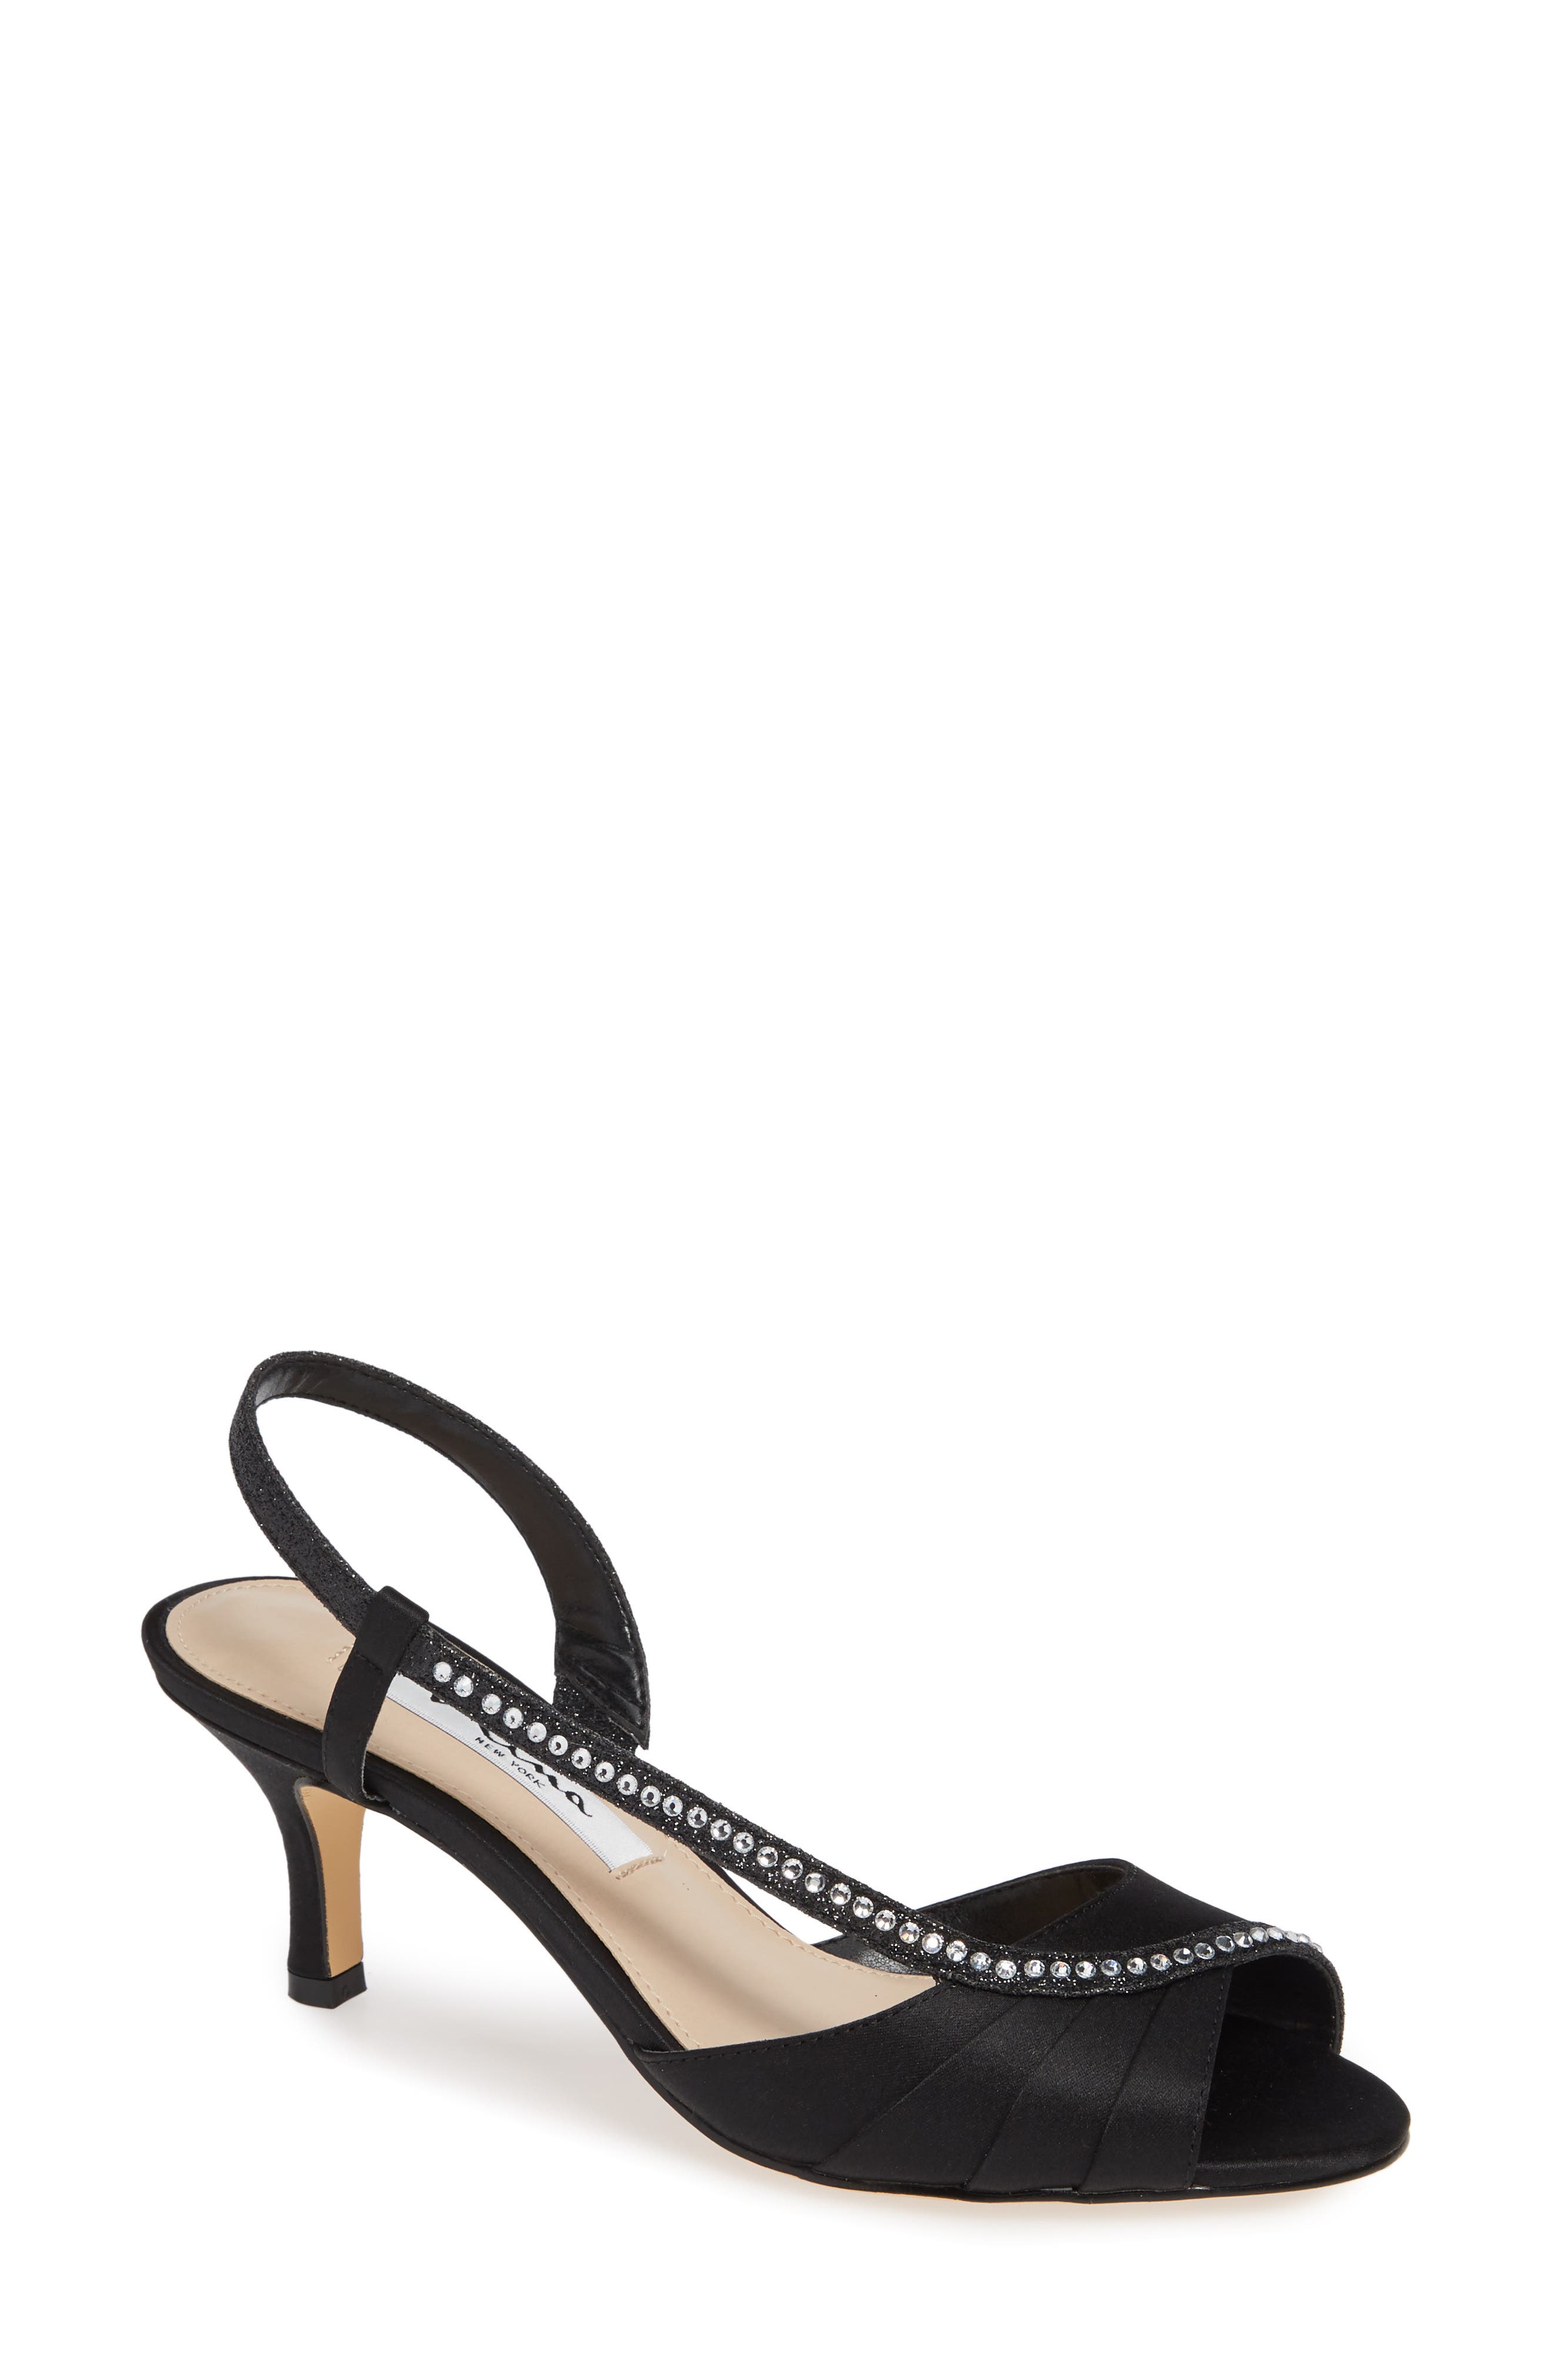 UPC 716142064809 product image for Women's Nina Cabell Slingback Sandal, Size 11 M - Black | upcitemdb.com